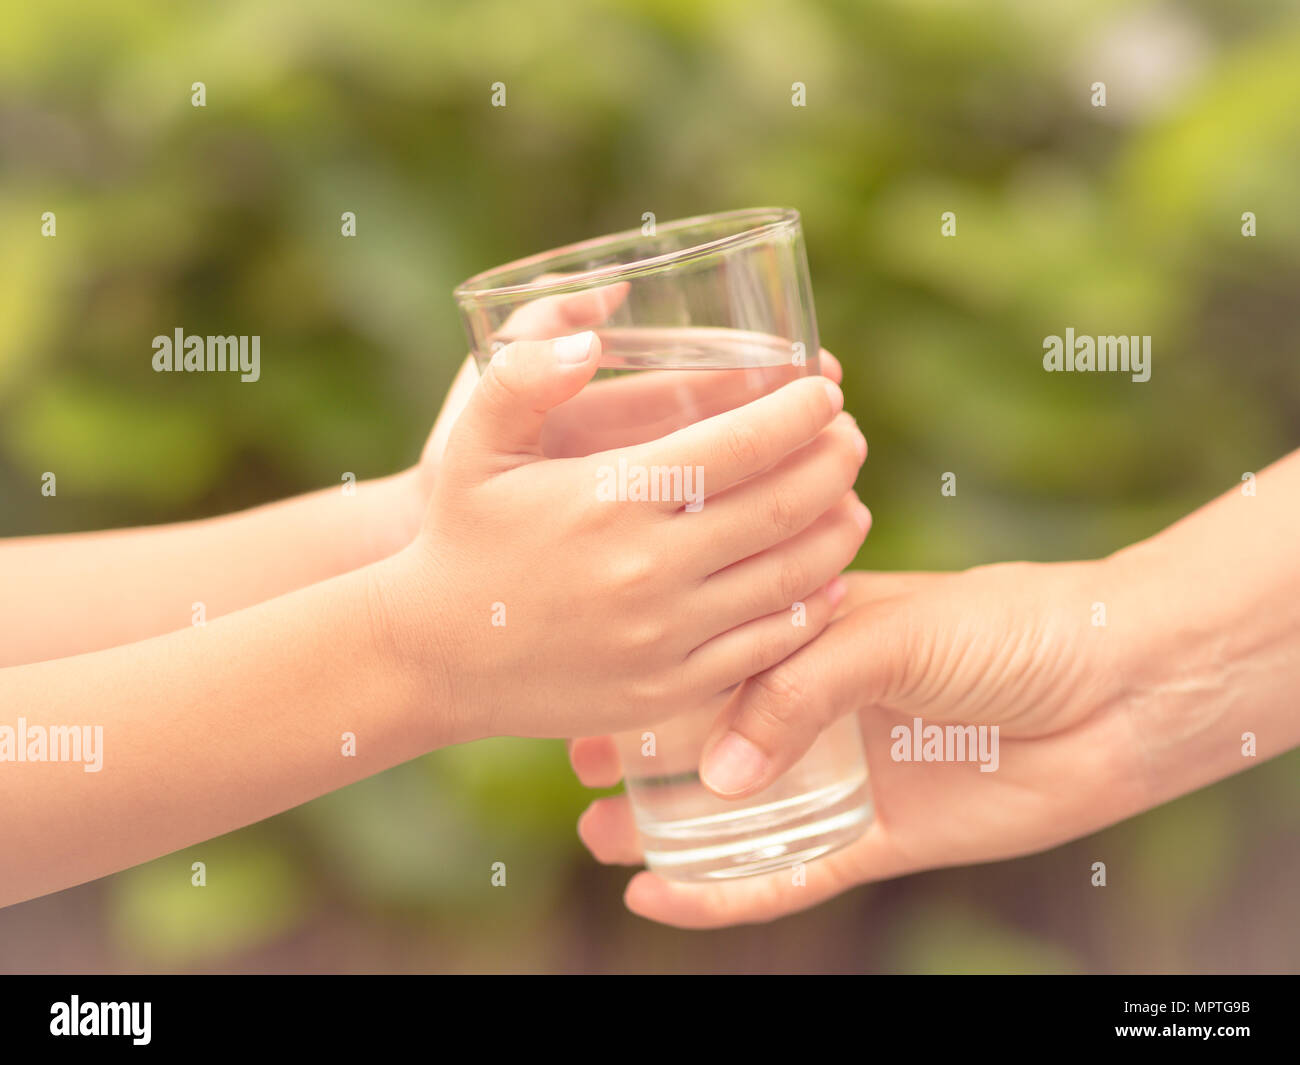 Не дали стакан воды. Стакан воды Эстетика. Дает стакан воды. Предложить стакан воды. Женская рука со стаканом воды.